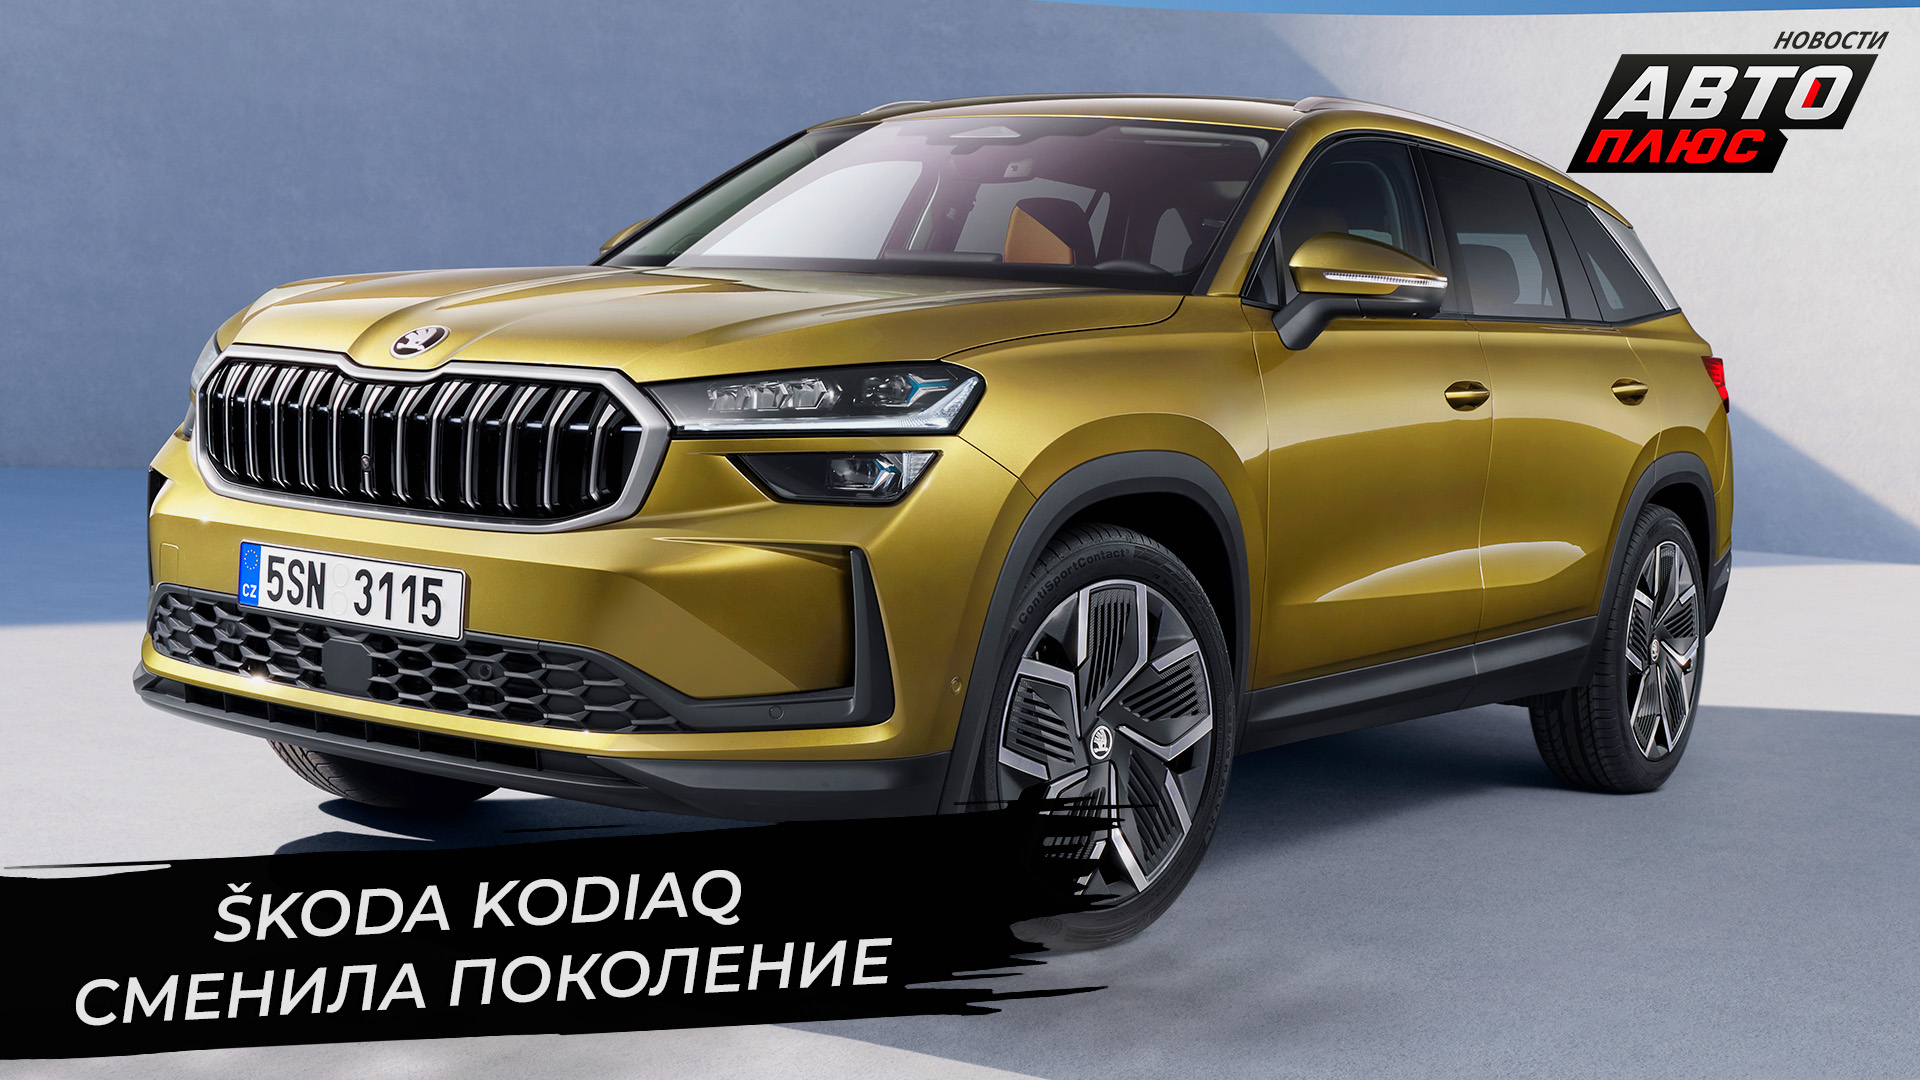 Škoda Kodiaq увеличила объём багажника | Новости с колёс №2686